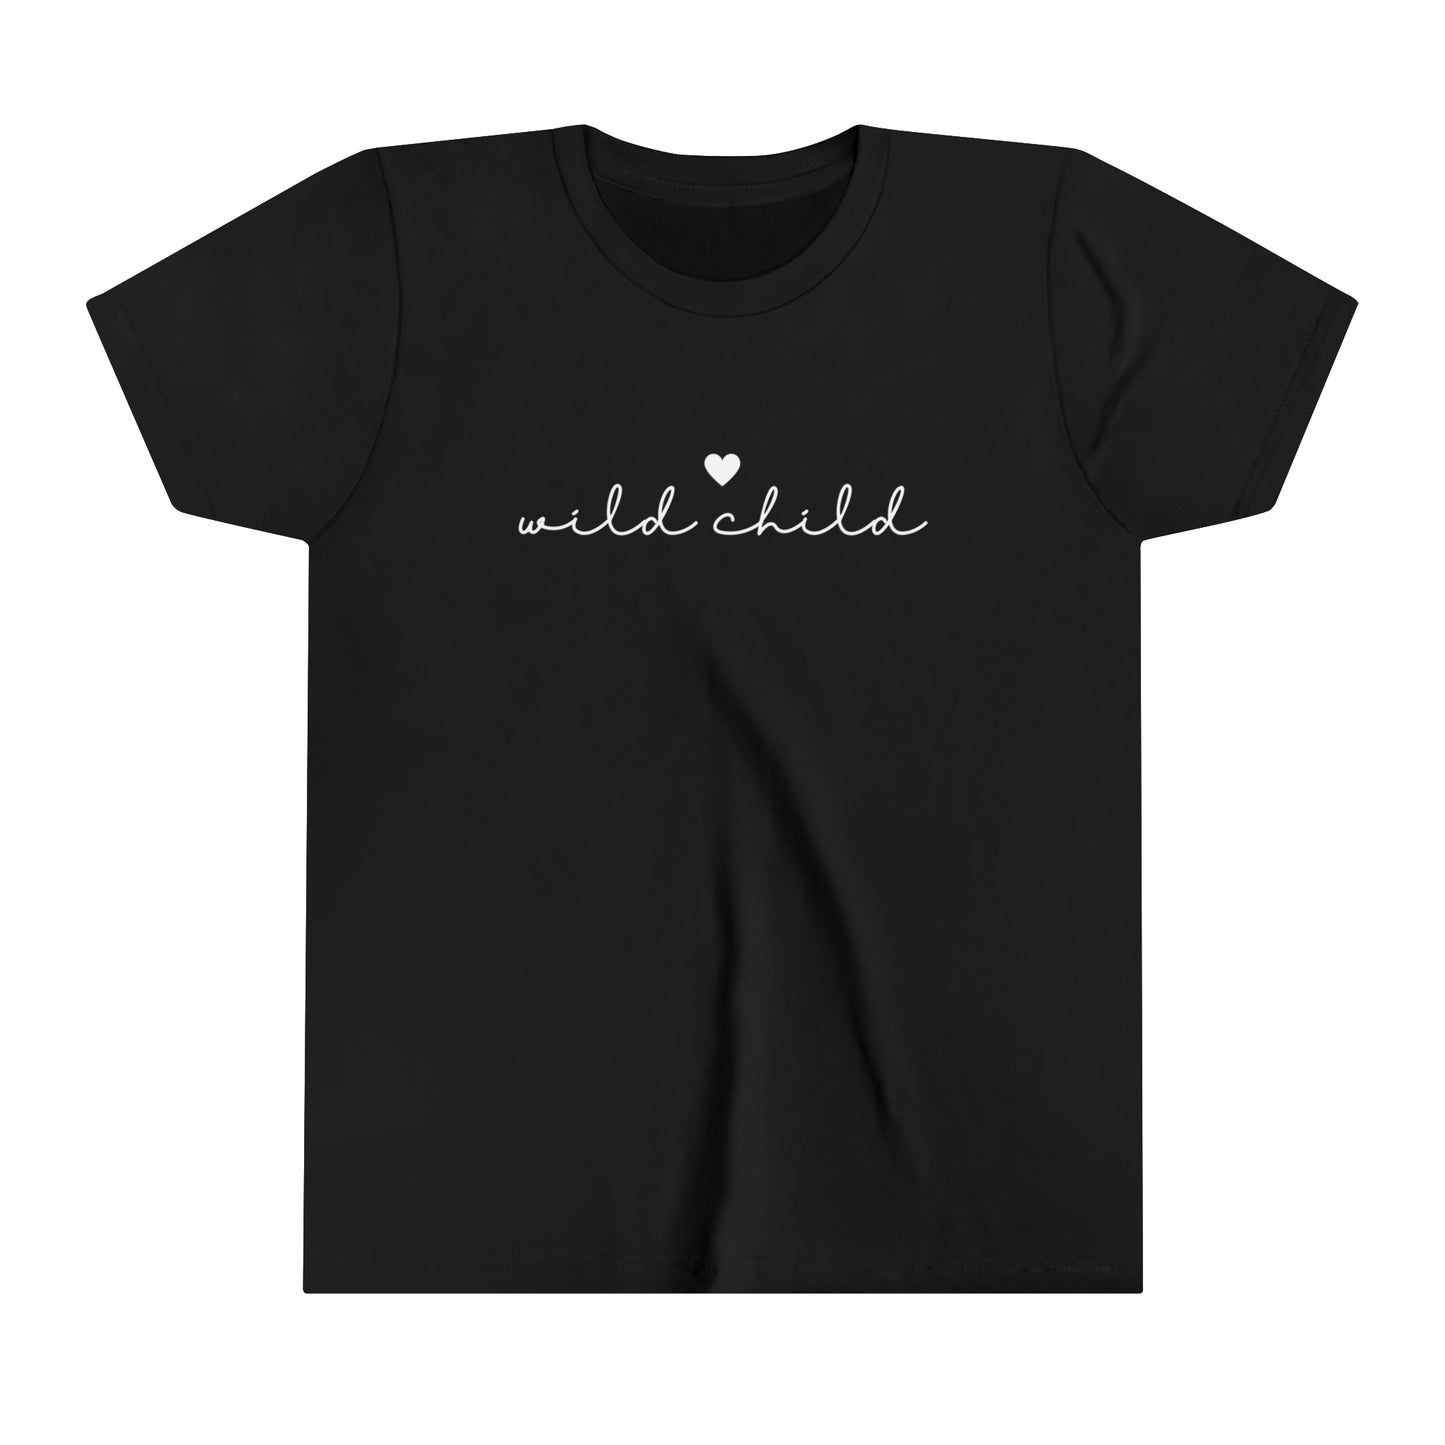 Wild Child "Mini Me" Youth T-Shirt